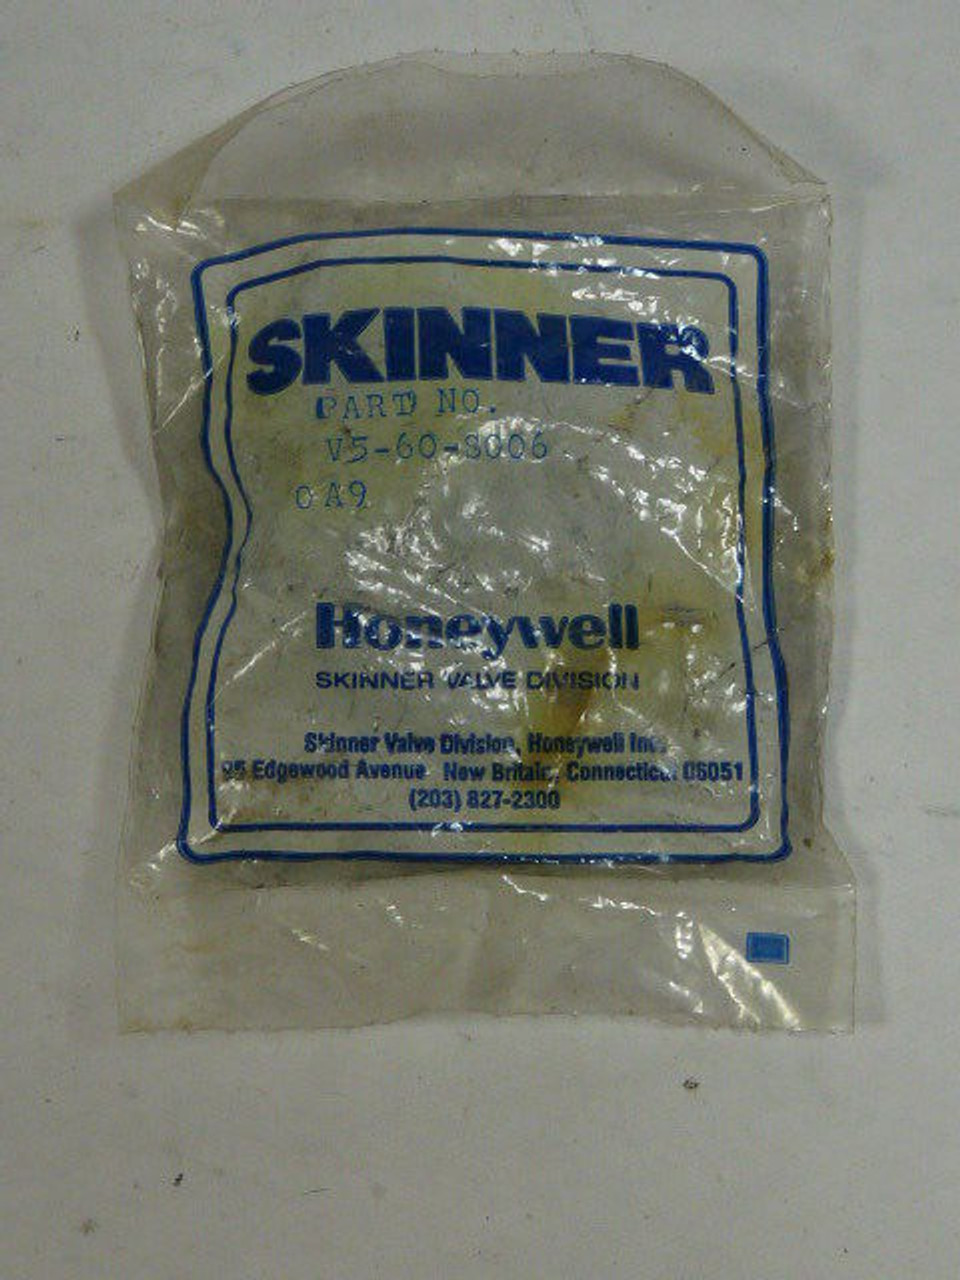 Skinner V5-60-S006 Components Parts Kit ! NEW !